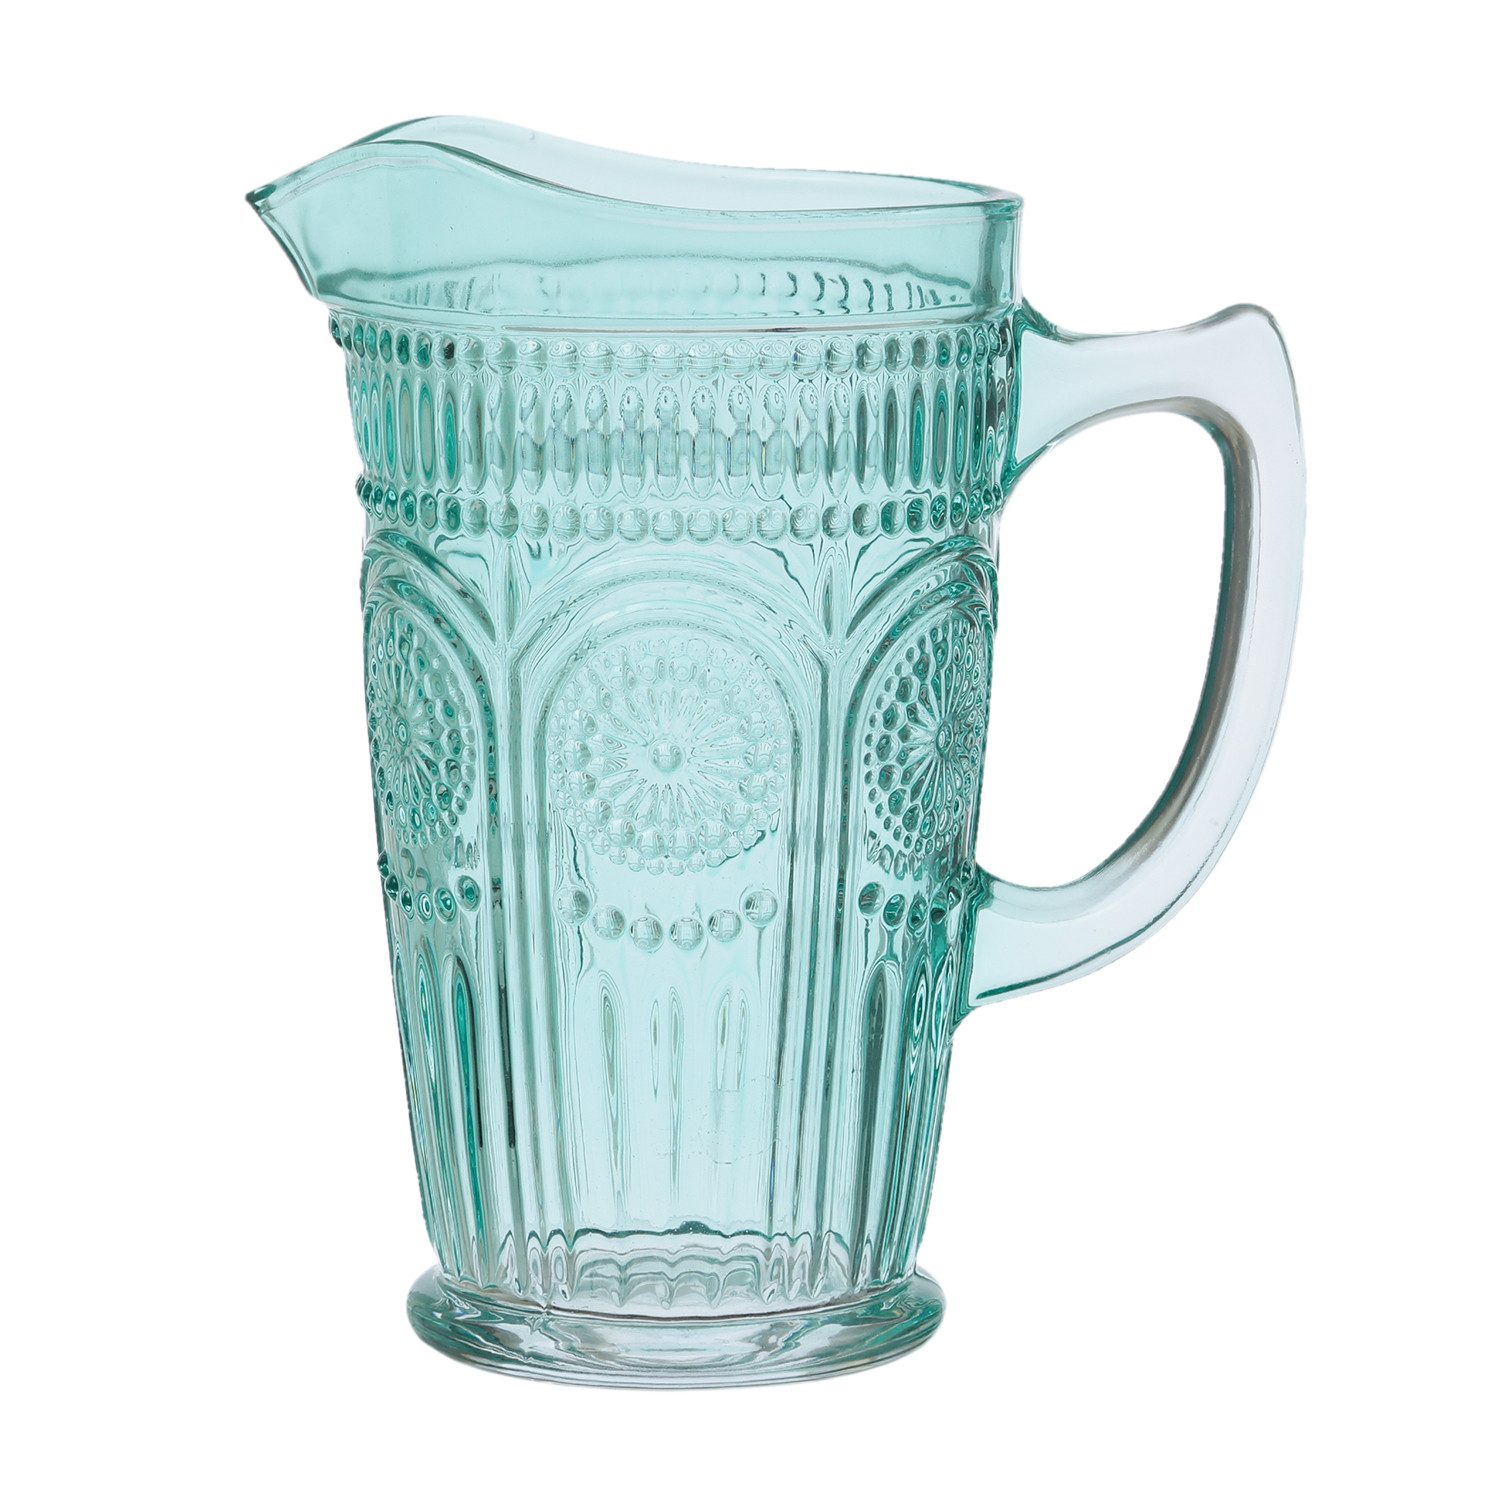 MARELIDA Wasserkrug Glaskrug Vintage Boho Blumenmuster Karaffe Tee Saft Kanne 1,4l blau